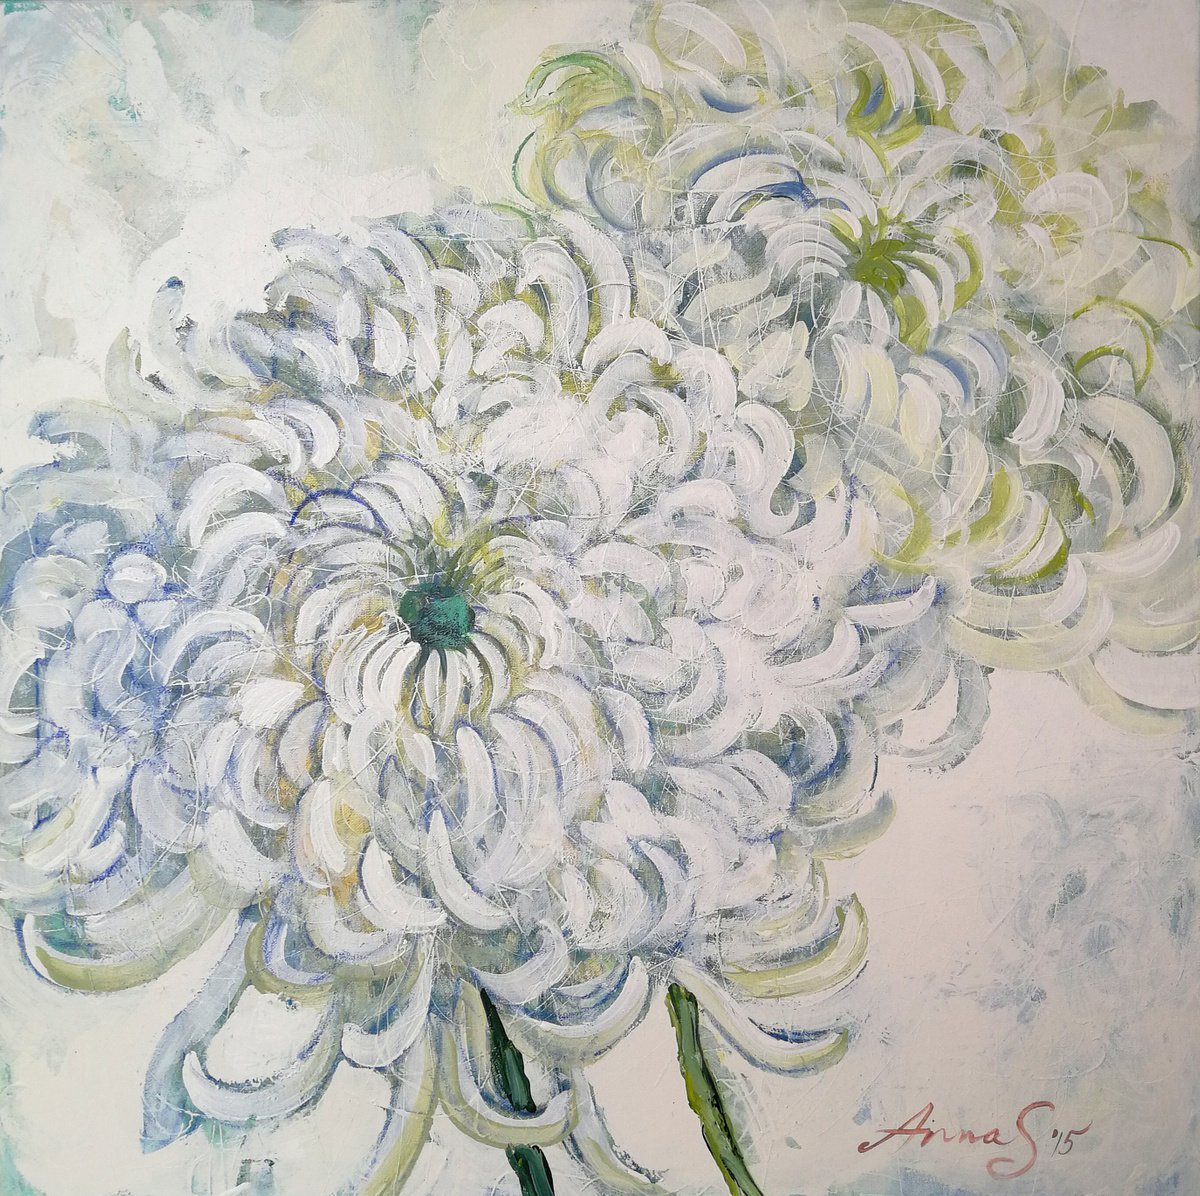 -Two White Chrysanthemum -? by Anna Silabrama